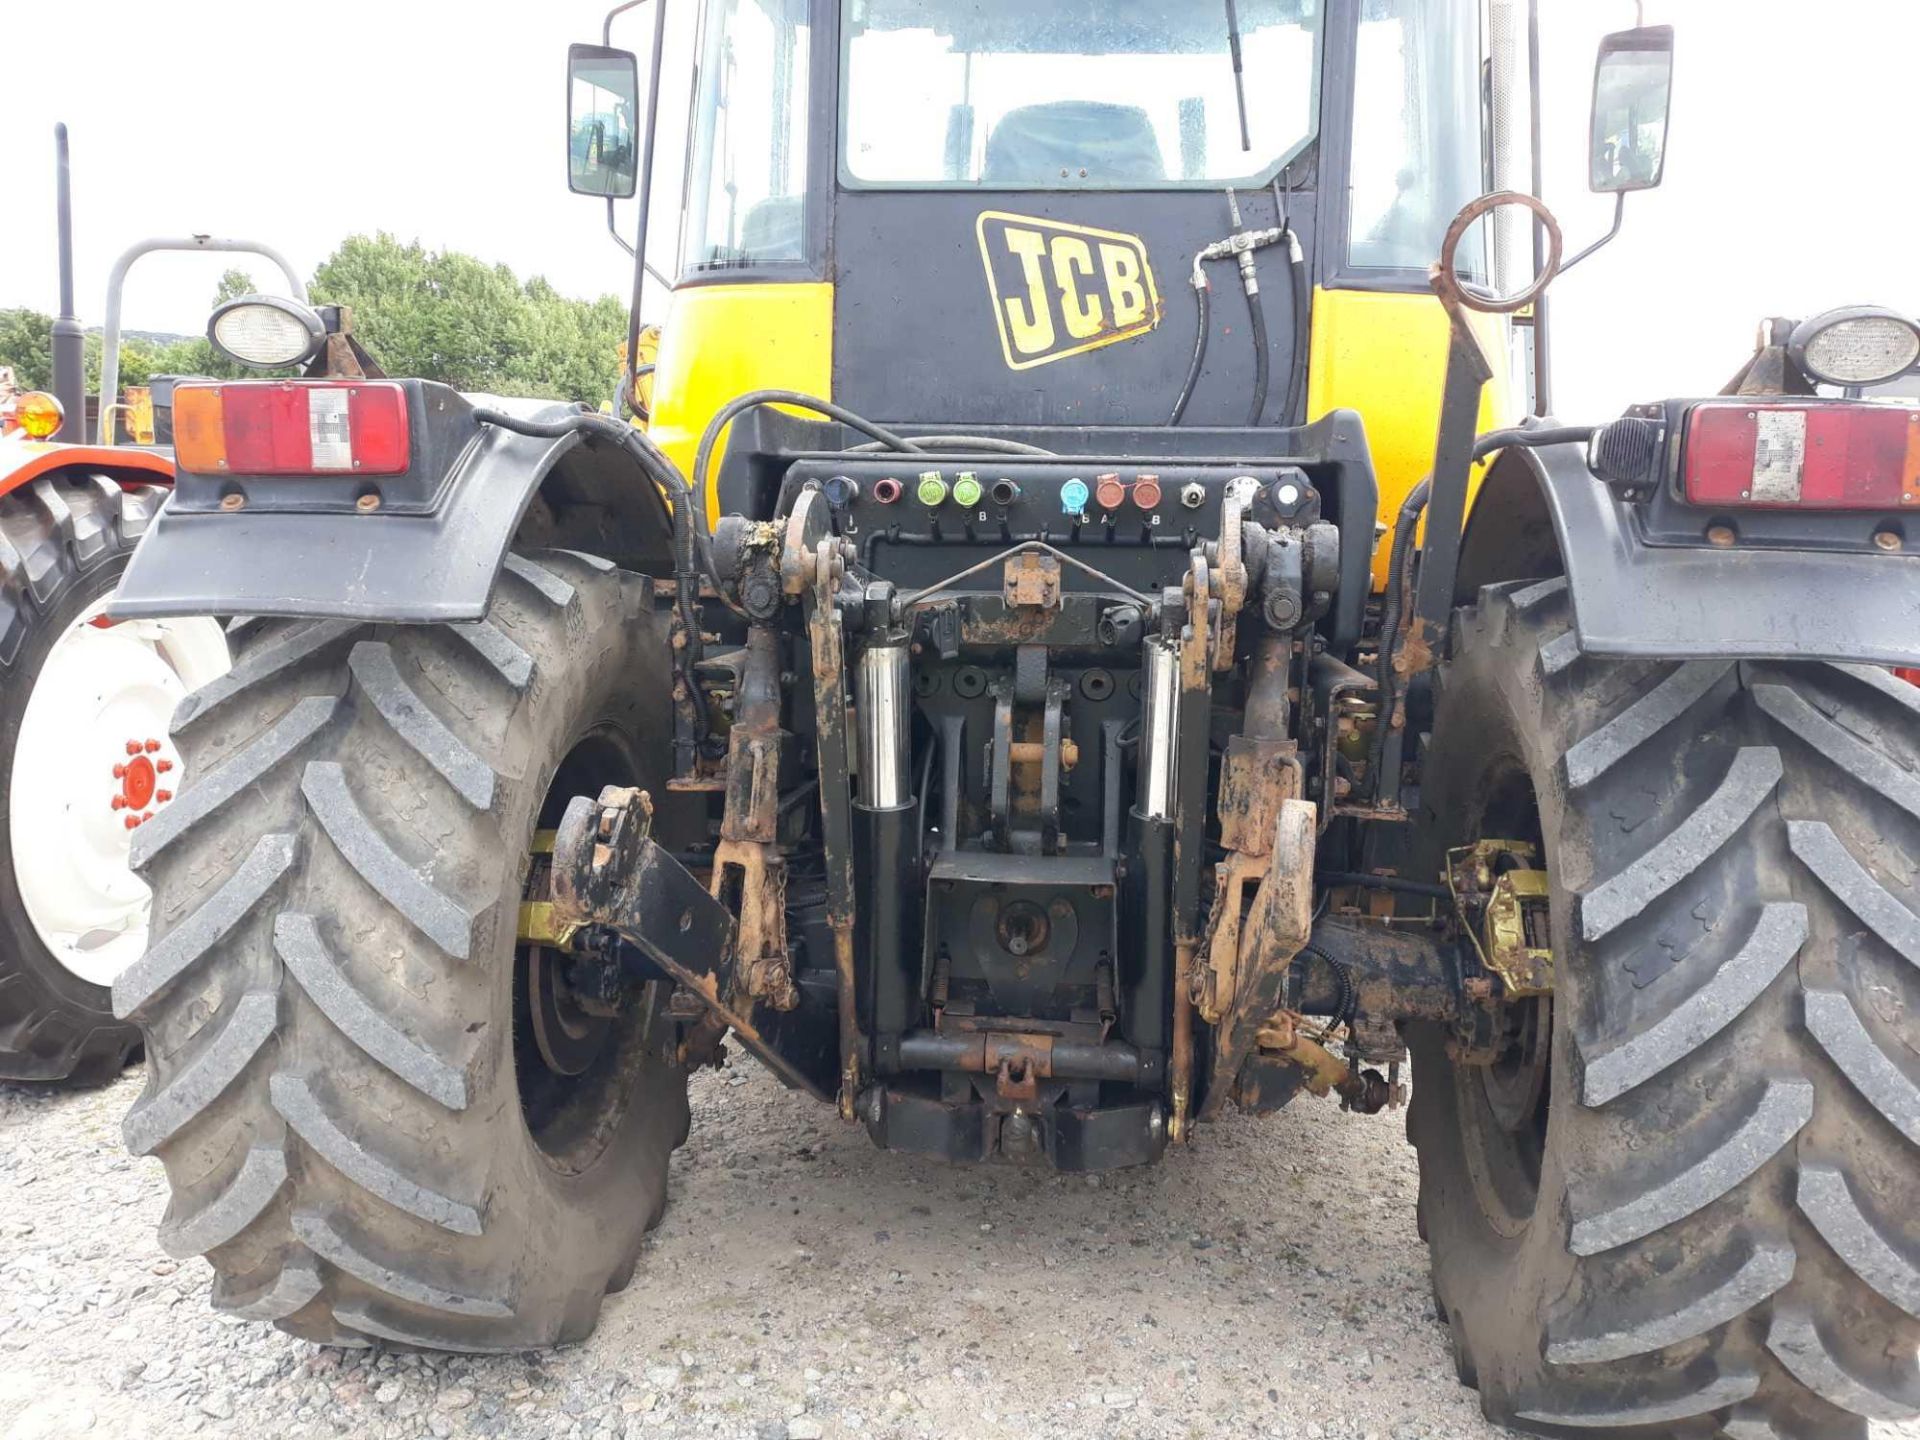 Jcb Fastrac 3220Plus - 5883cc Tractor - Image 8 of 8